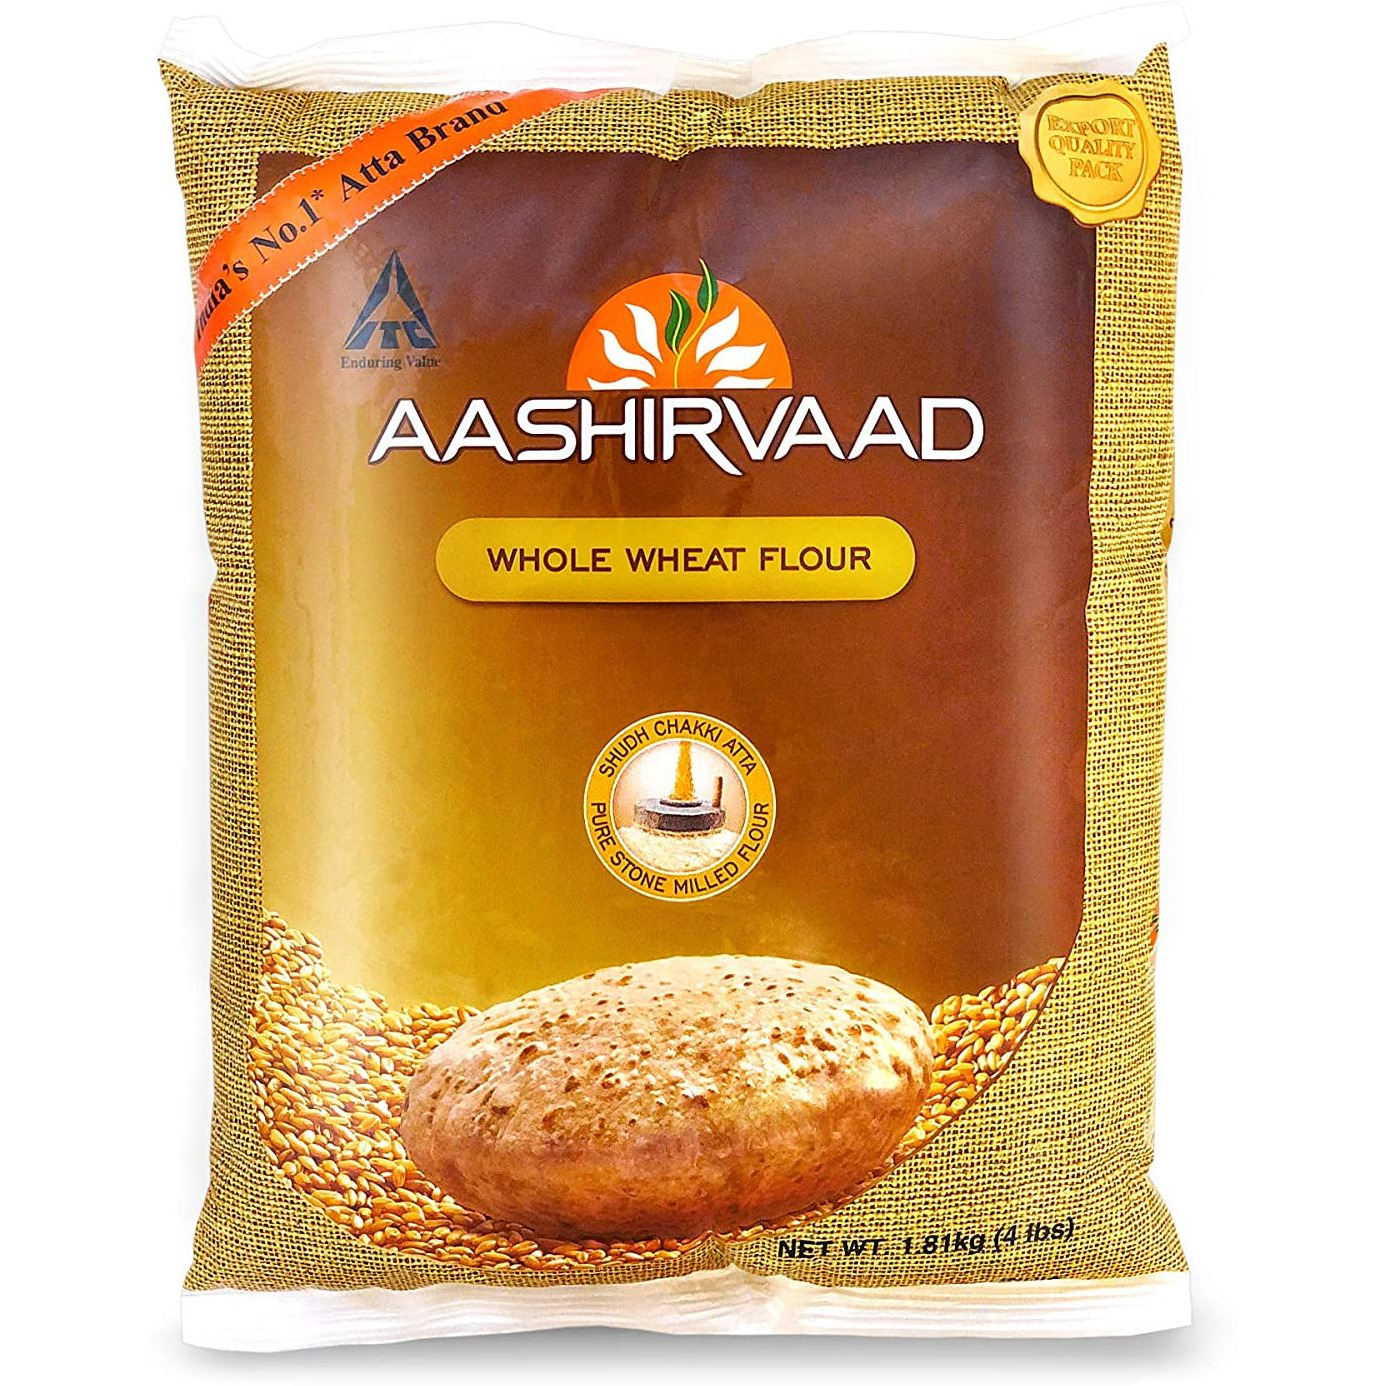 Aashirvaad Whole Wheat Flour - 4 Lb (1.81 Kg)